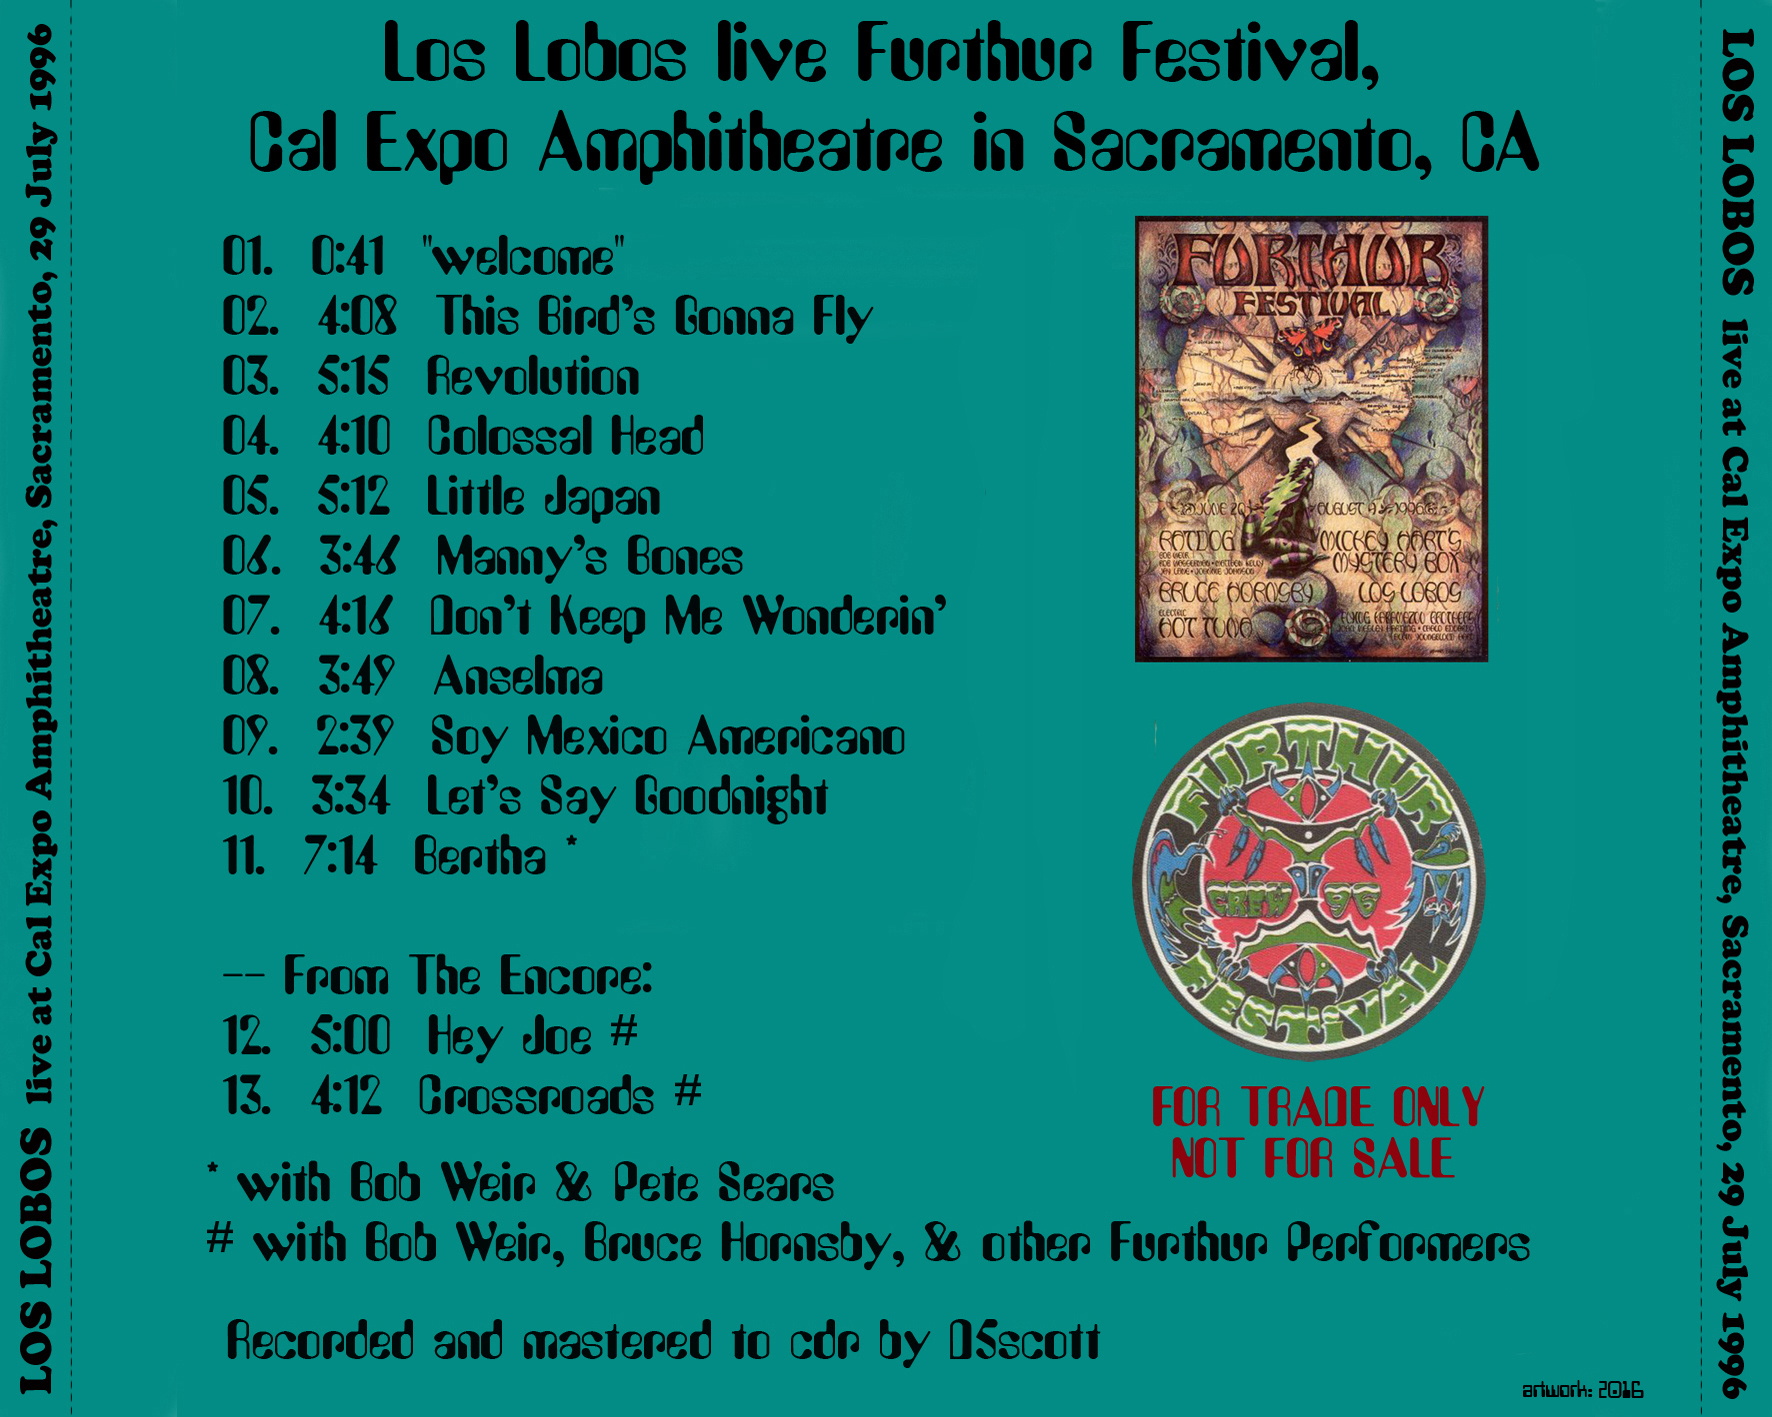 Los Lobos live cd at Furthur Festival ctray